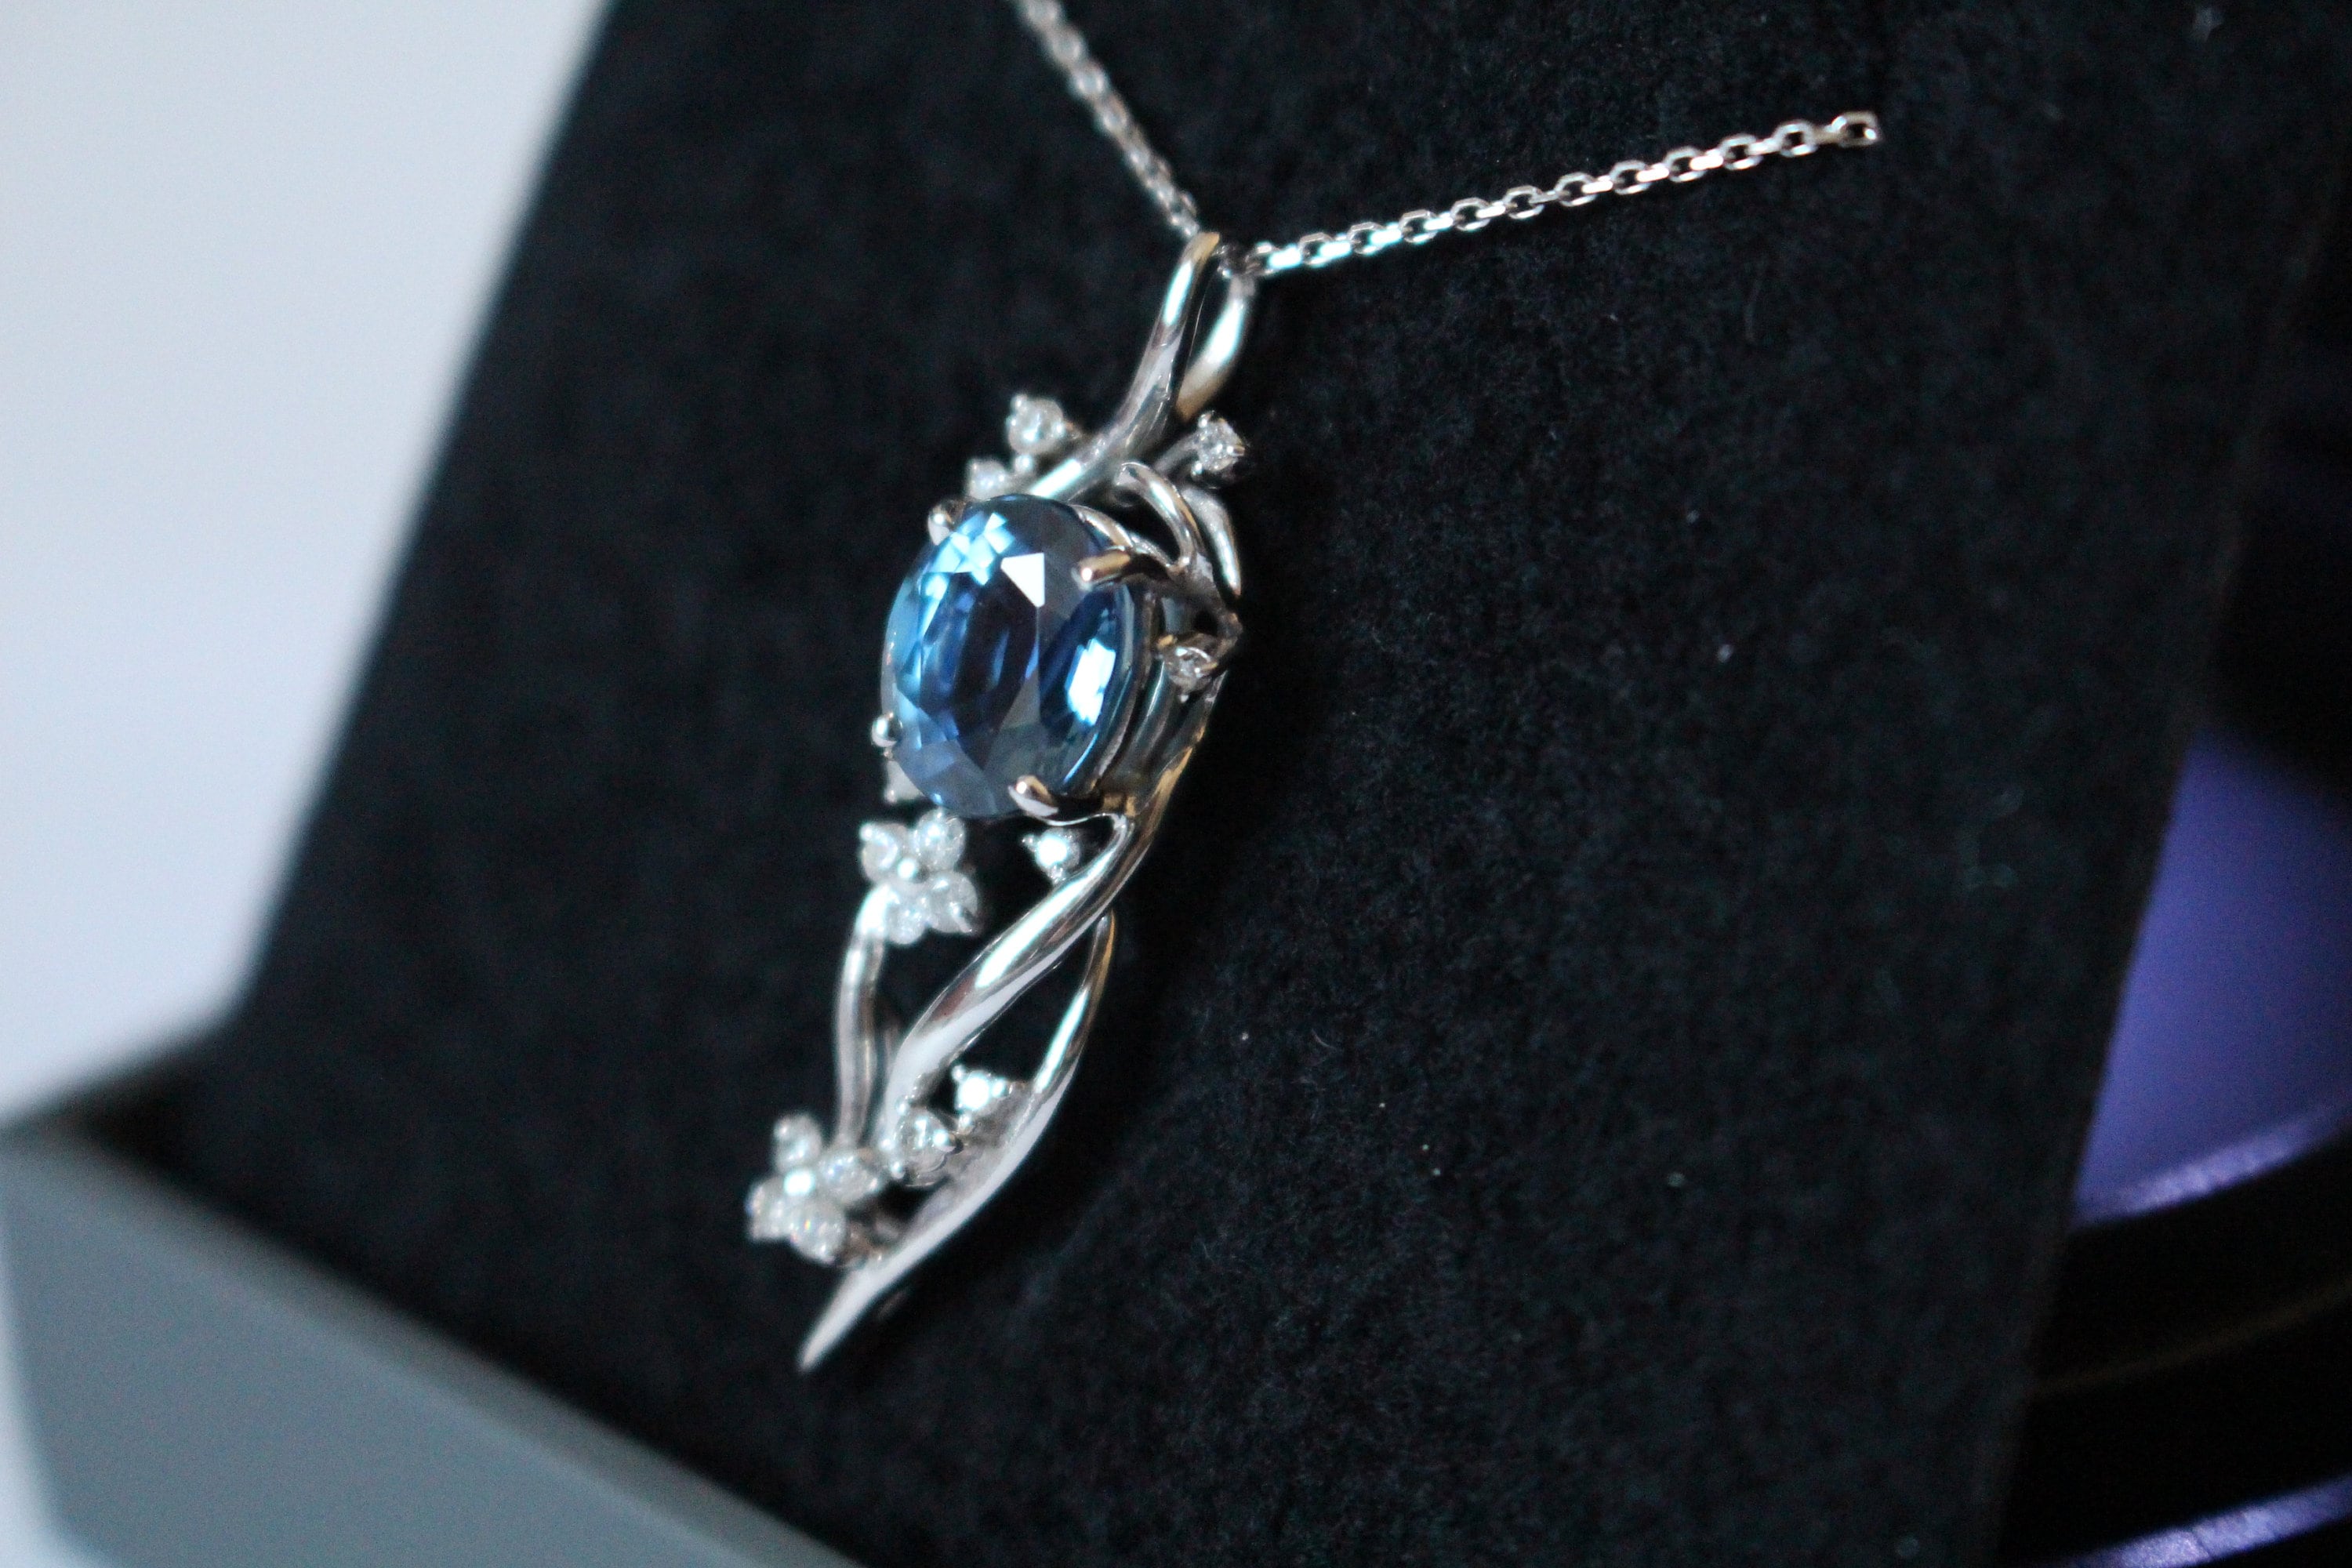 White Gold 291.17 Ct. Blue Sapphire & White Diamond Necklace Jewelry